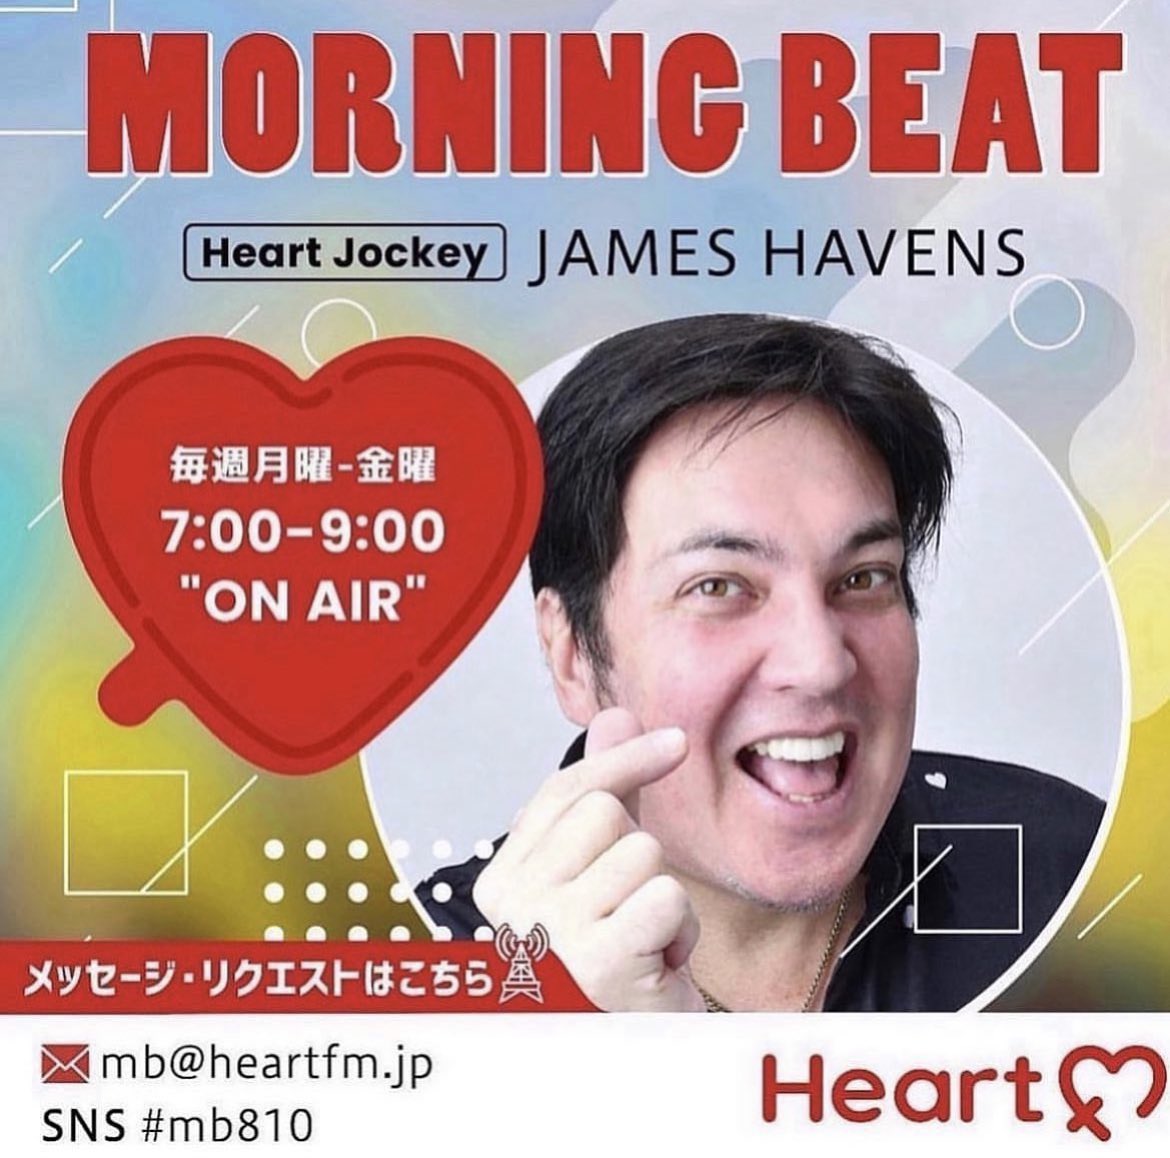 AM7:00-9:00'ON AIR' 「MORNING BEAT」 HJ : ジェイムス・ヘイブンス 生リク&ノー元気お待ちしております🫶 メッセージはこちらから💁‍♂️ E-mail : mb@heartfm.jp SNS : #mb810 #heartfm810 HP : heartfm.jp/present/